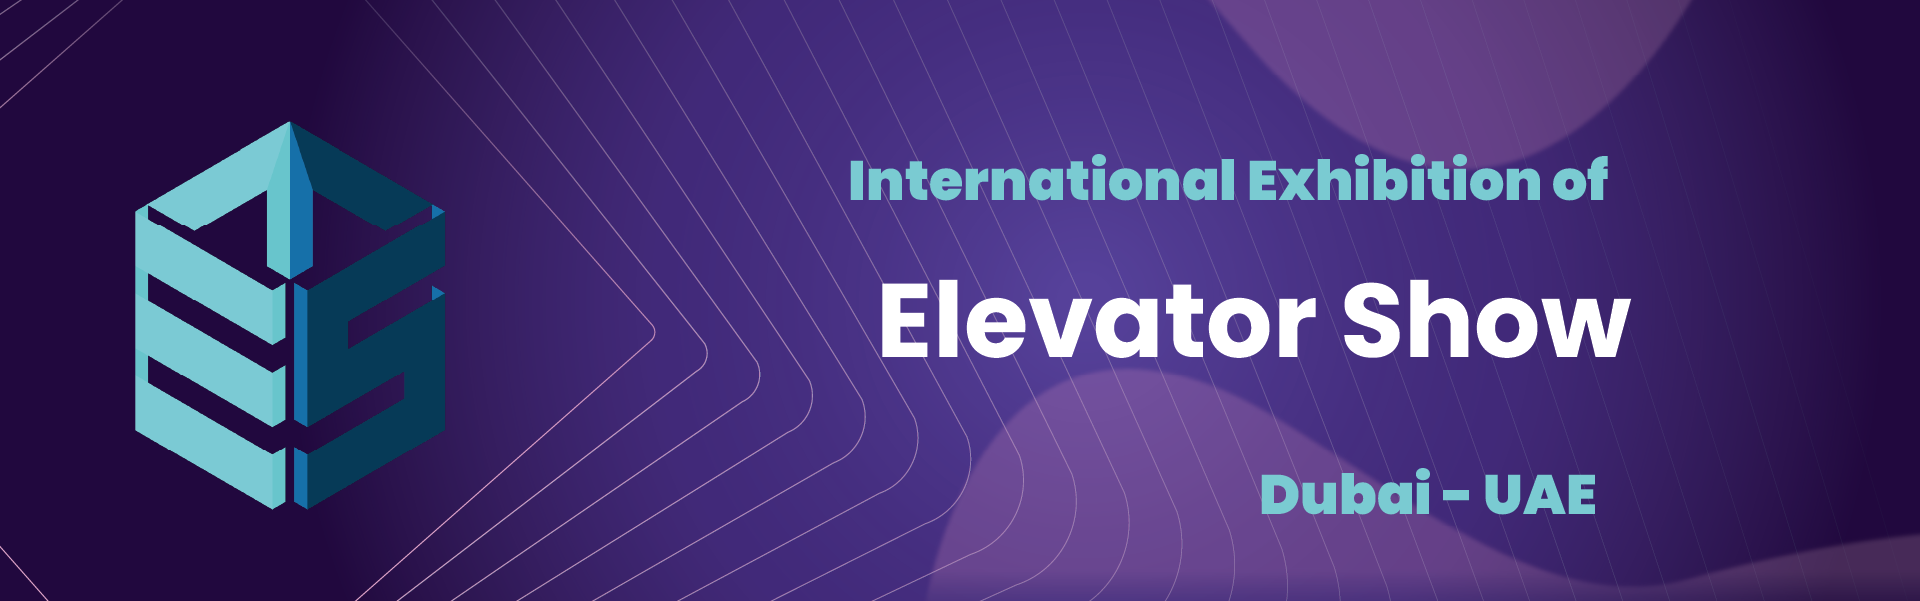 elevator exhibition Dubai (elevator show)